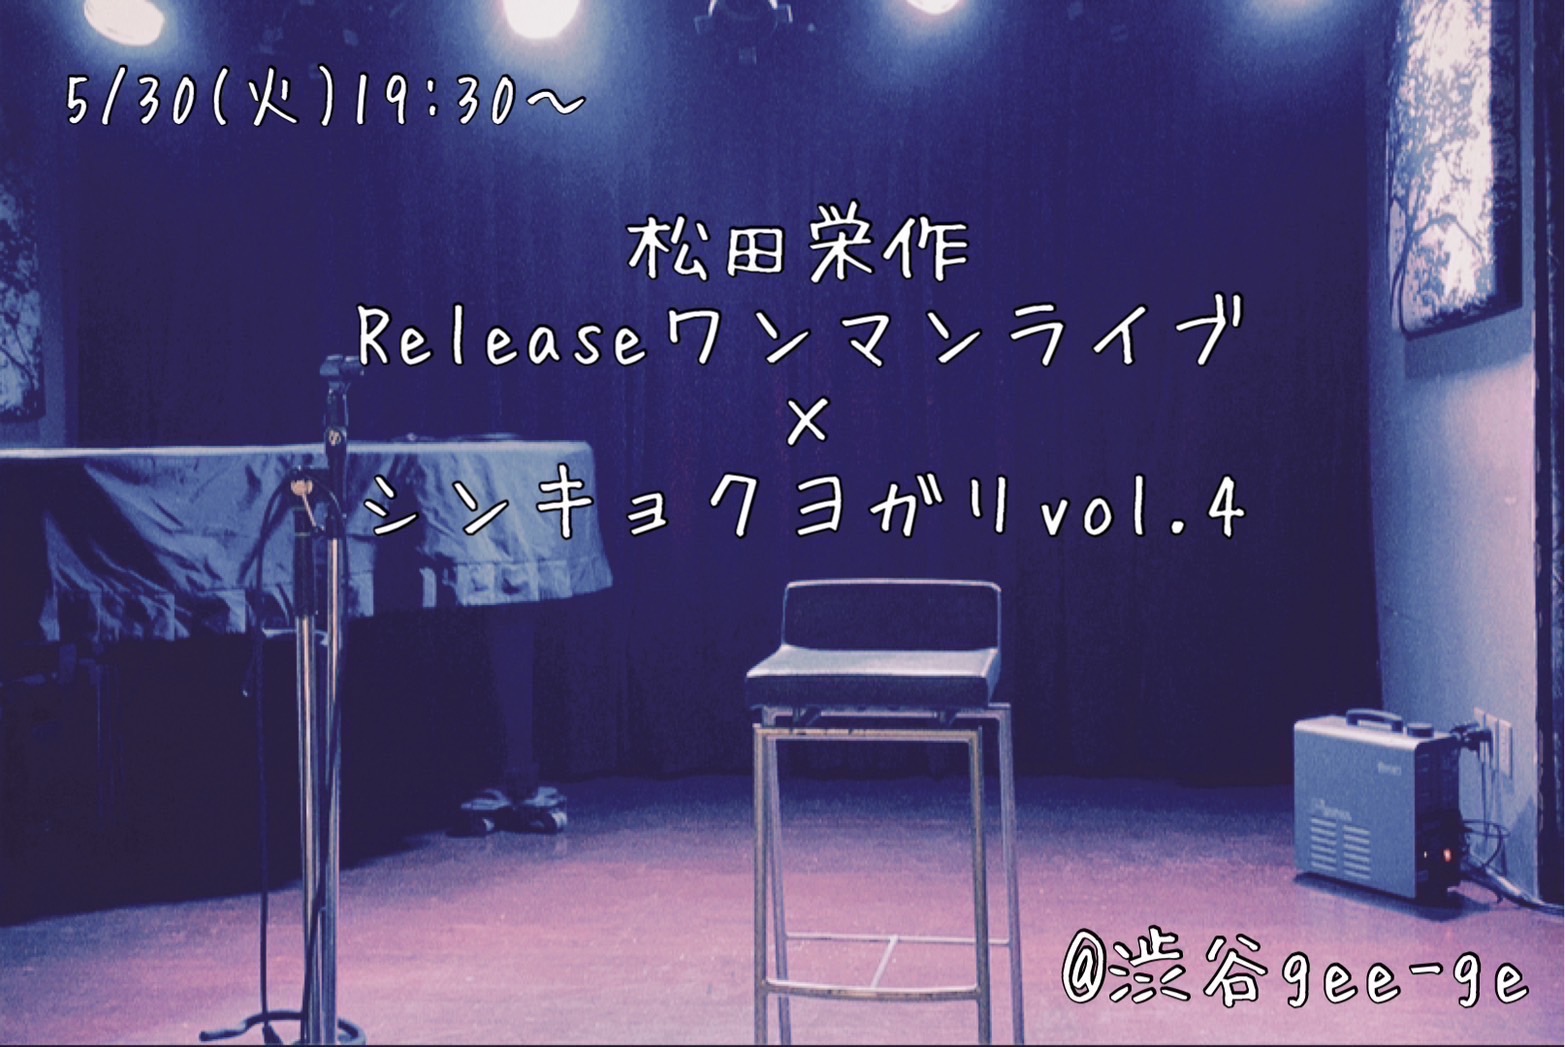 「Release LIVE×シンキョクヨガリvol.4」